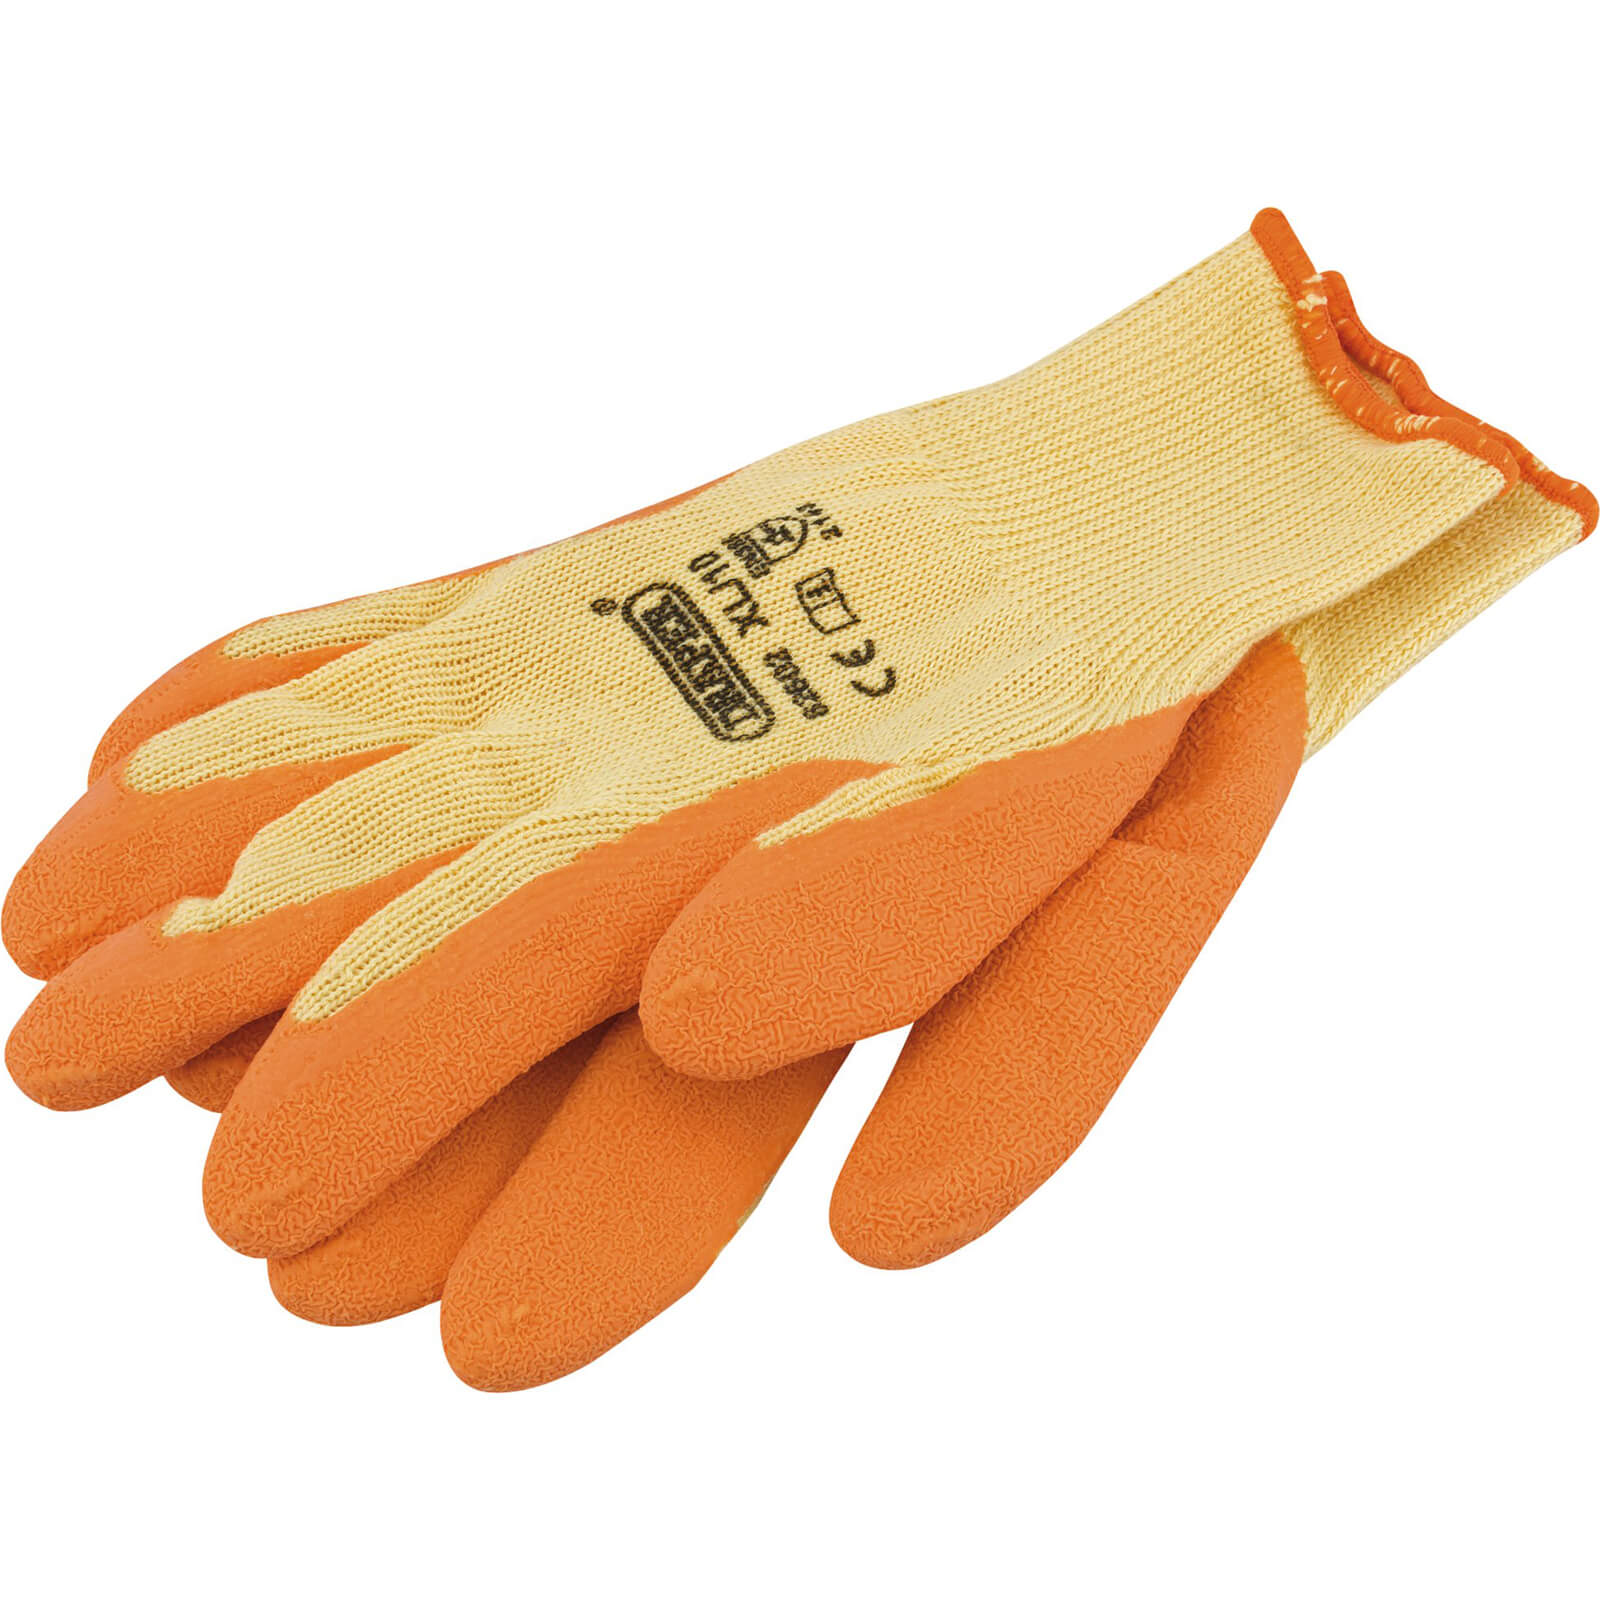 Image of Draper Orange Heavy Duty Latex Coated Work Gloves Yellow / Orange L